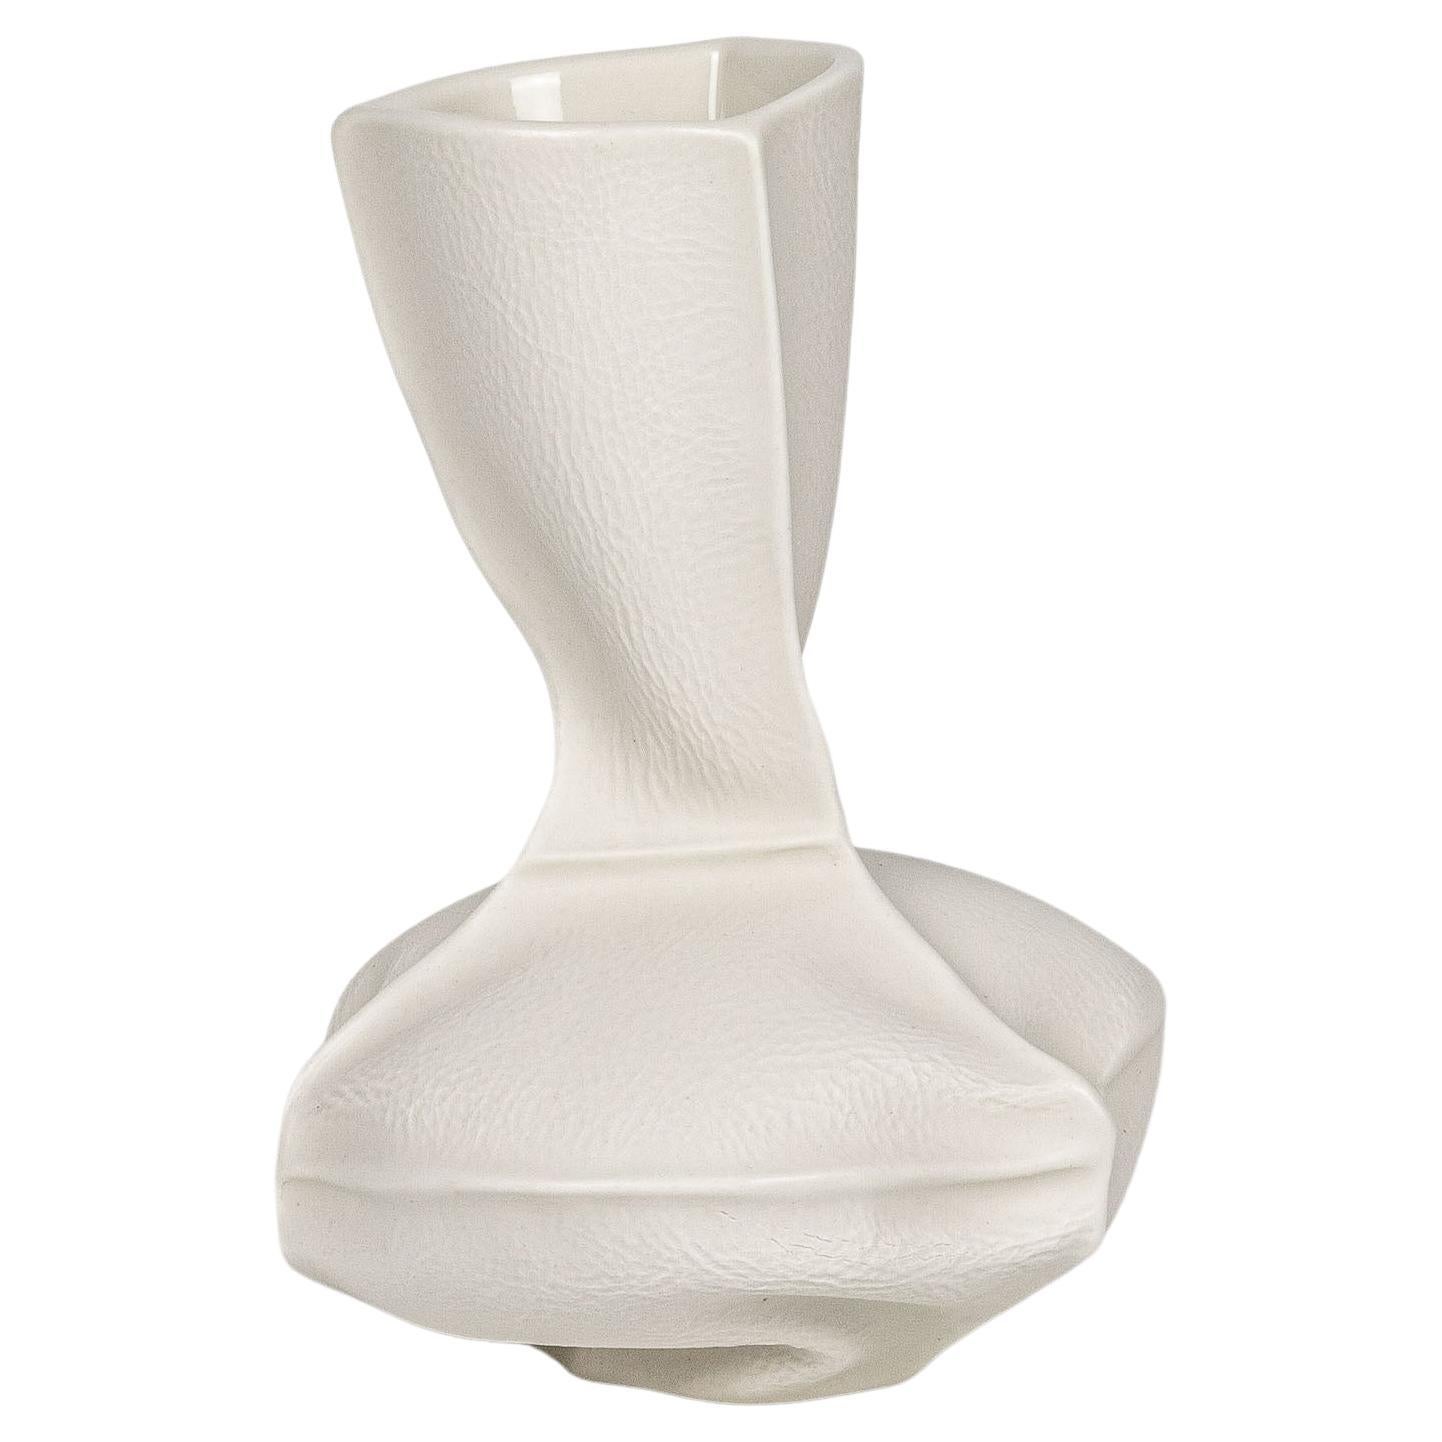 Weiße Bio-Keramik Kawa Vase #15, Blumenvase aus Porzellan mit Lederguss